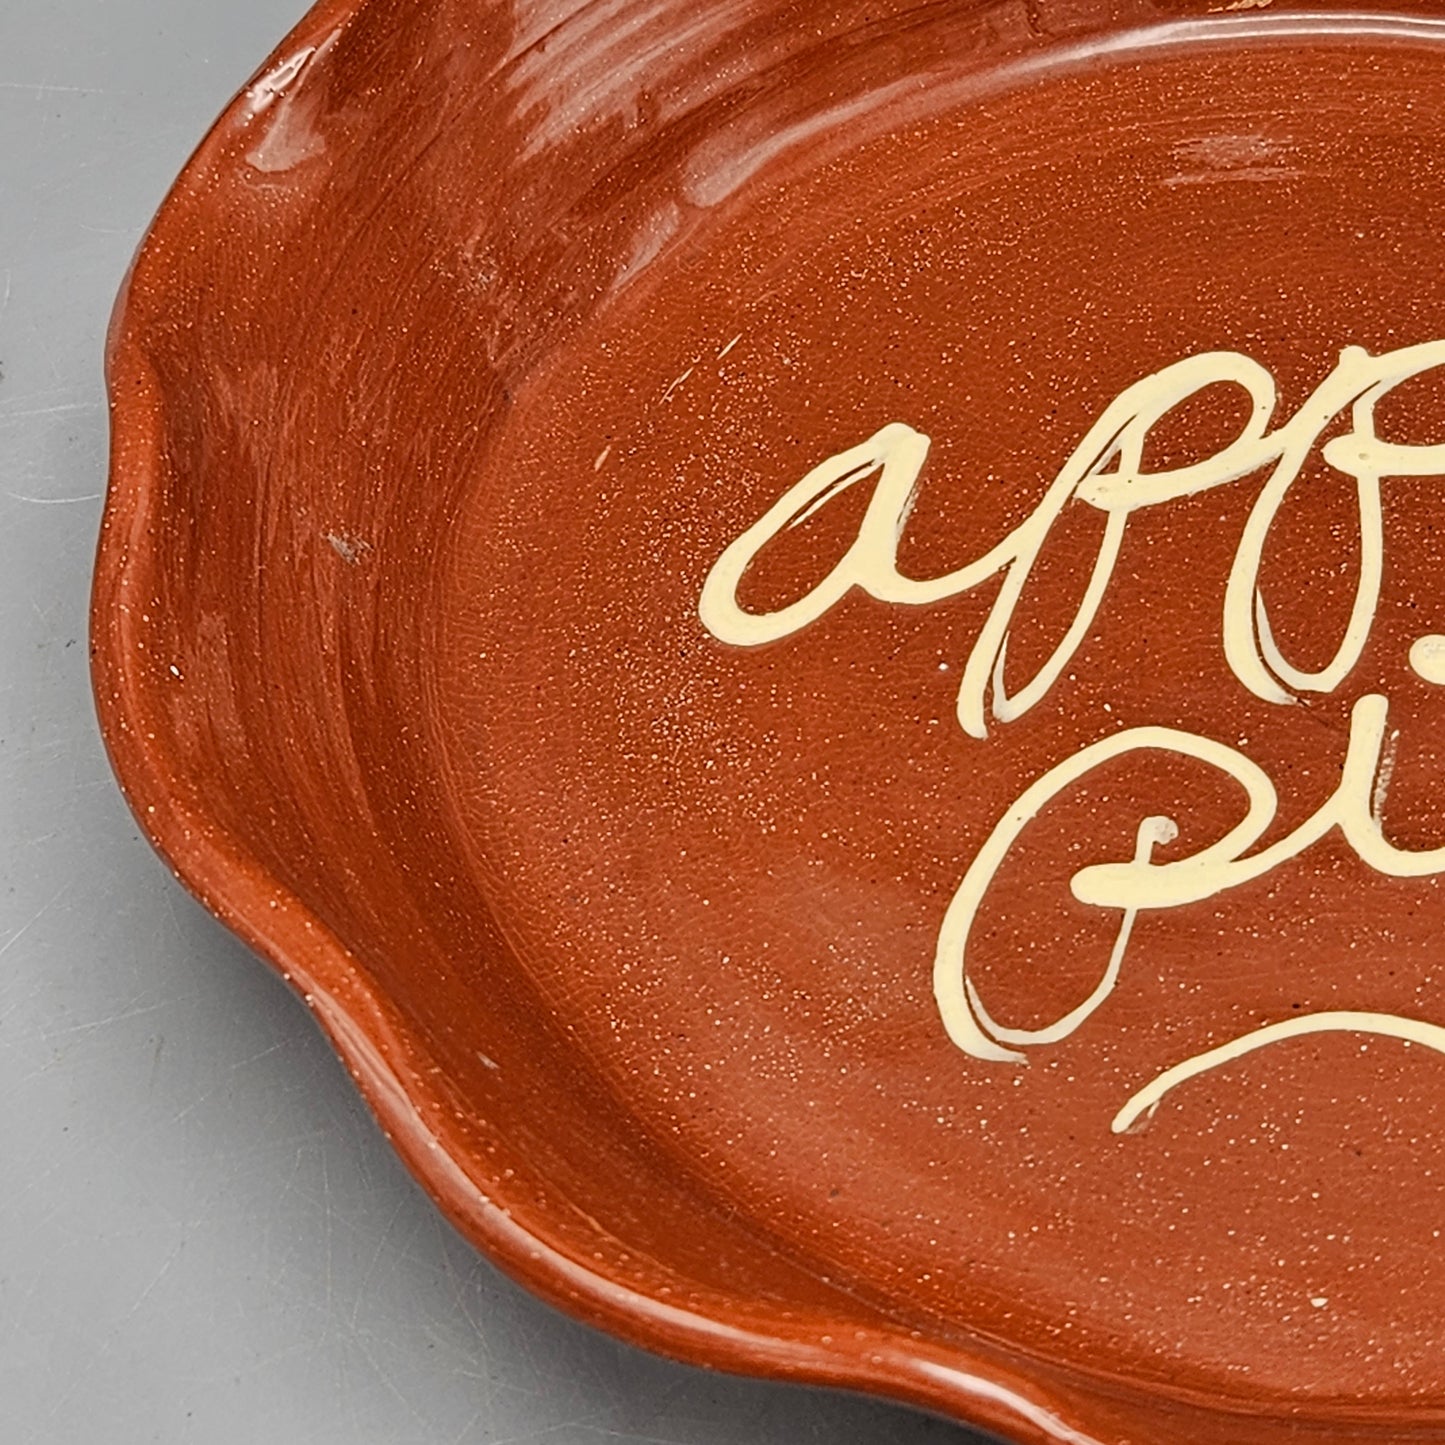 Signed Redwre Apple Pie Dish 1984